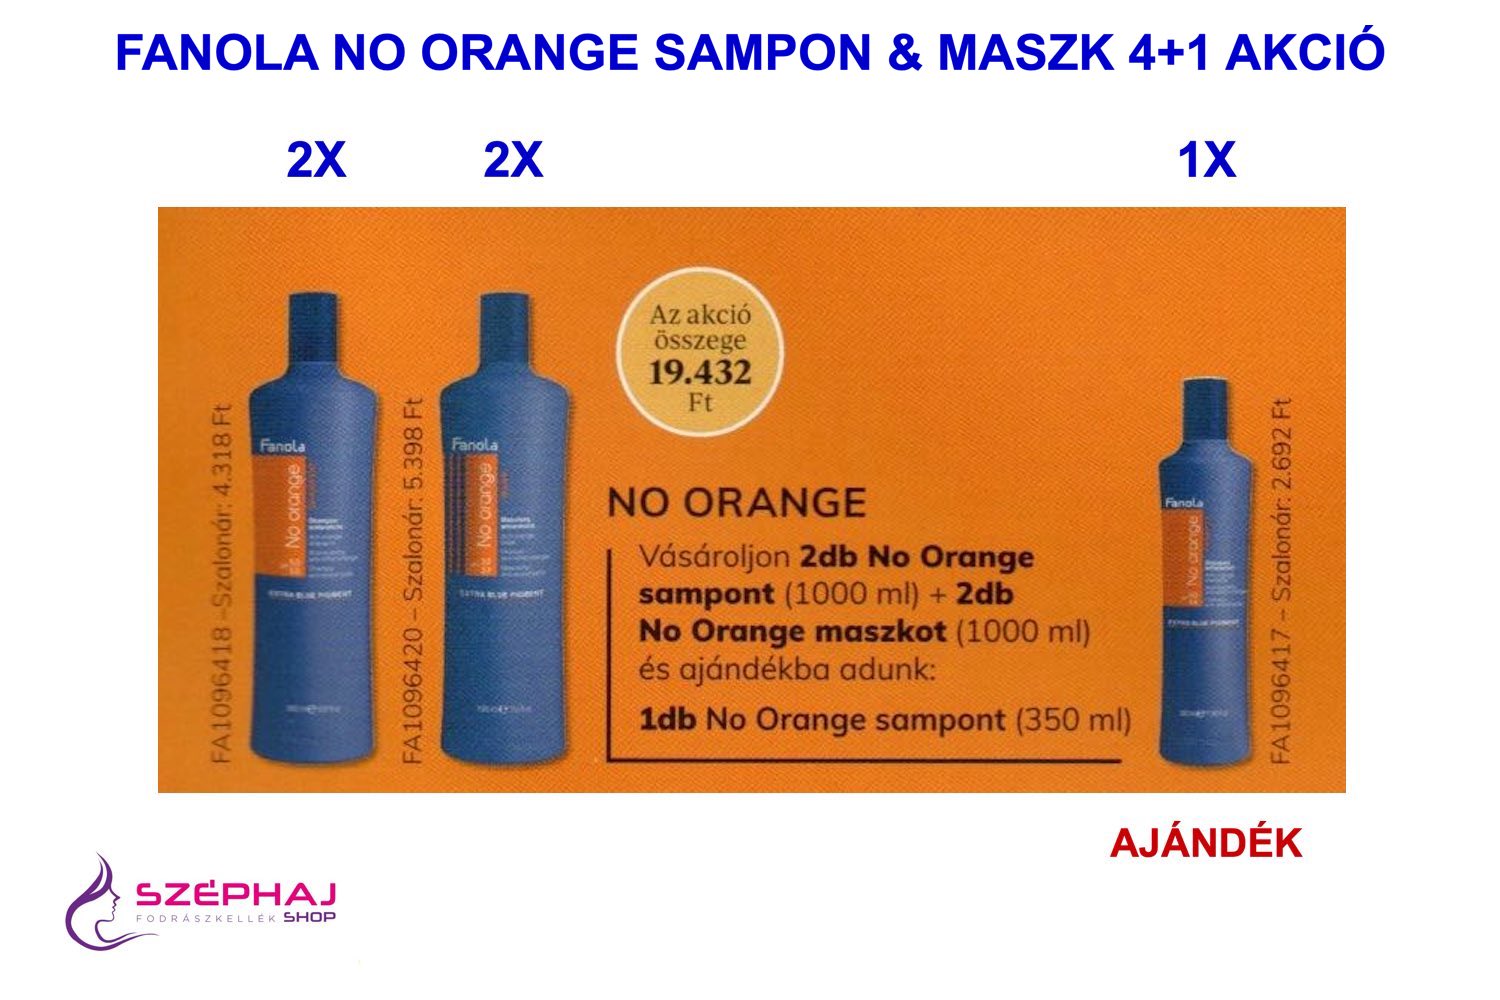 FANOLA No Orange Sampon & Maszk 1000 ml 4+1 AKCIÓ